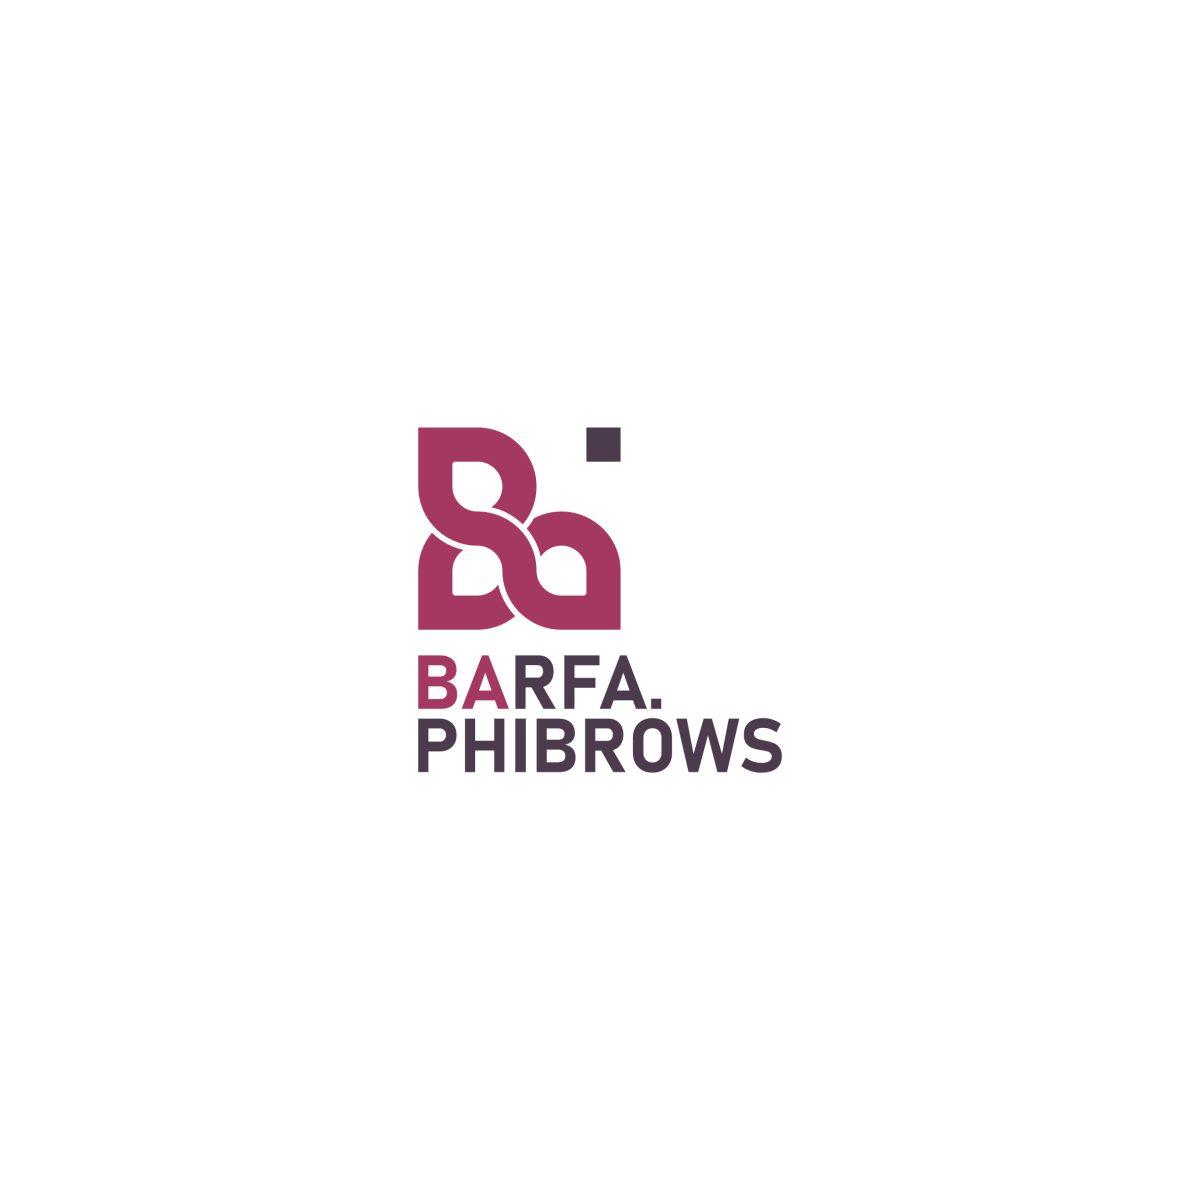 طراحی لوگو Barfa phibrows